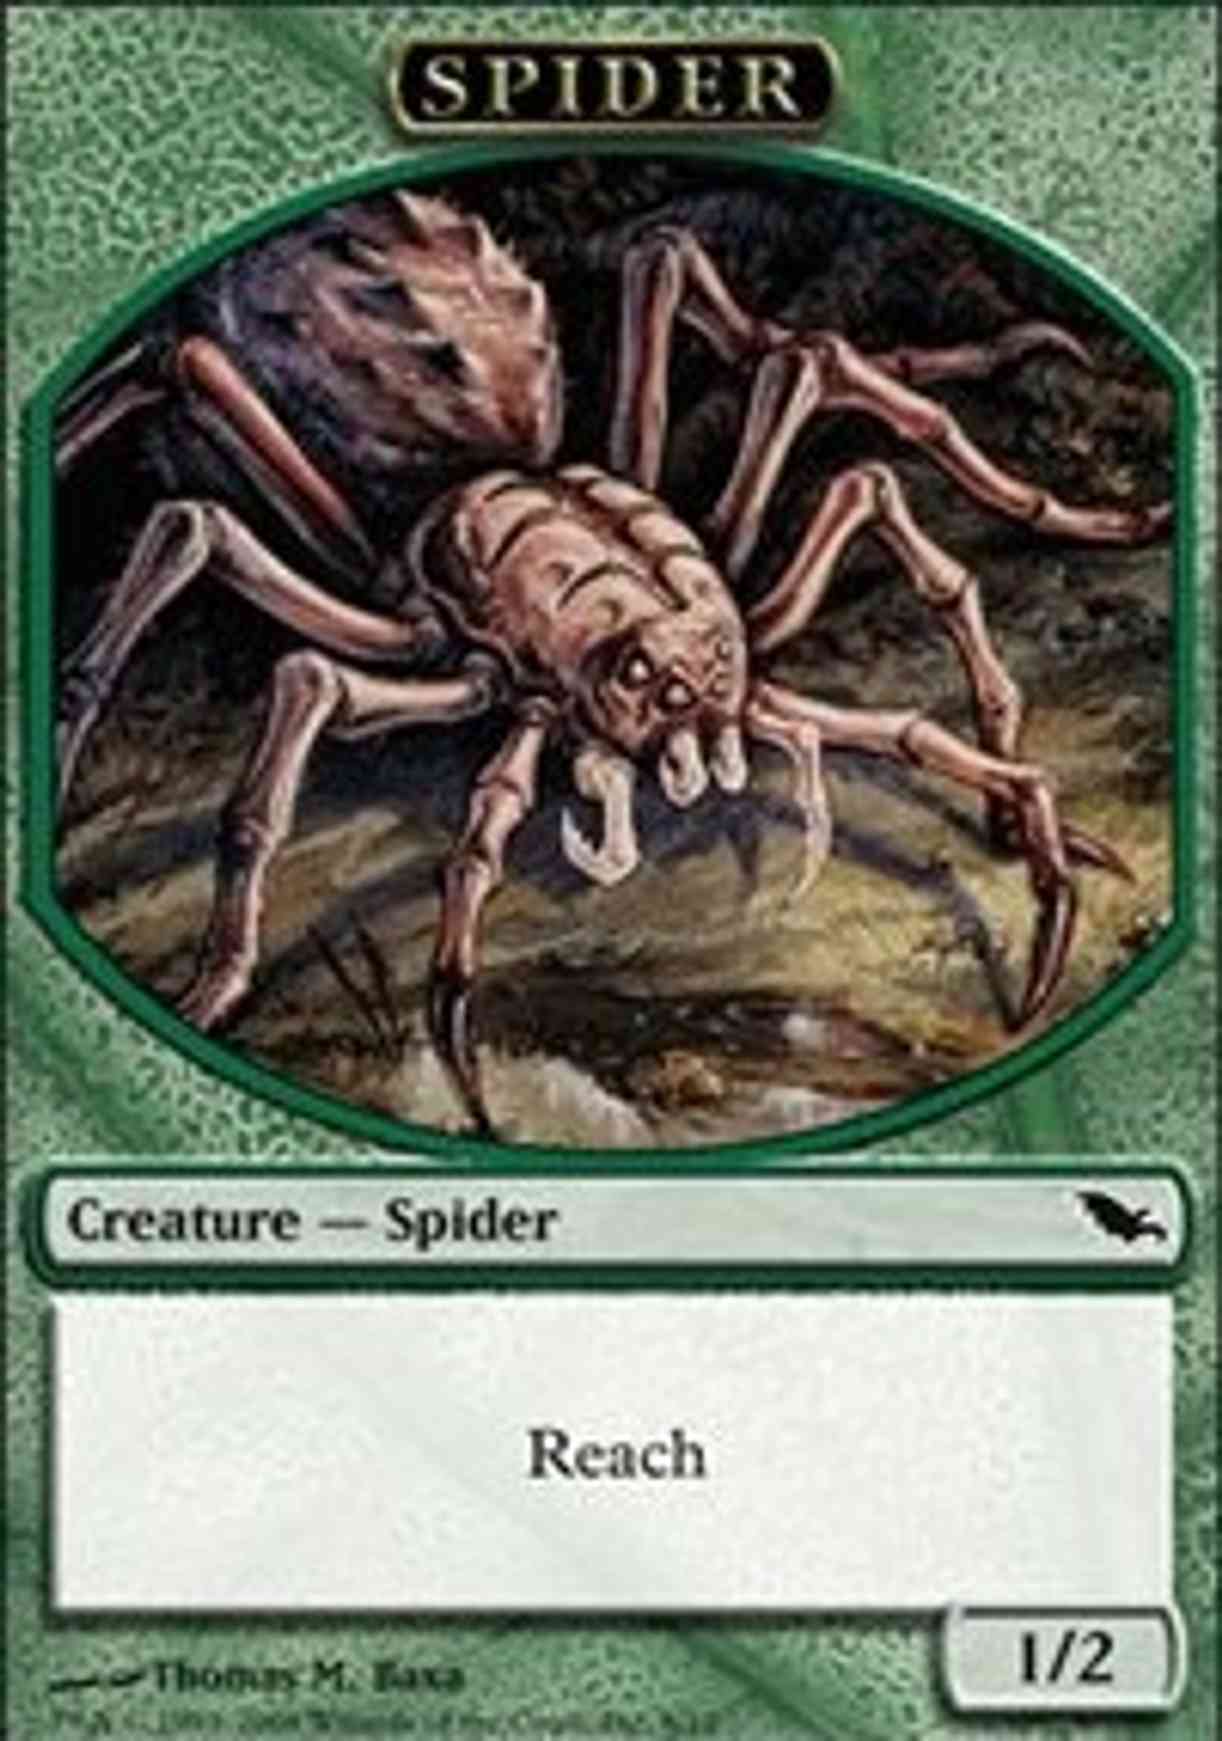 Spider Token magic card front